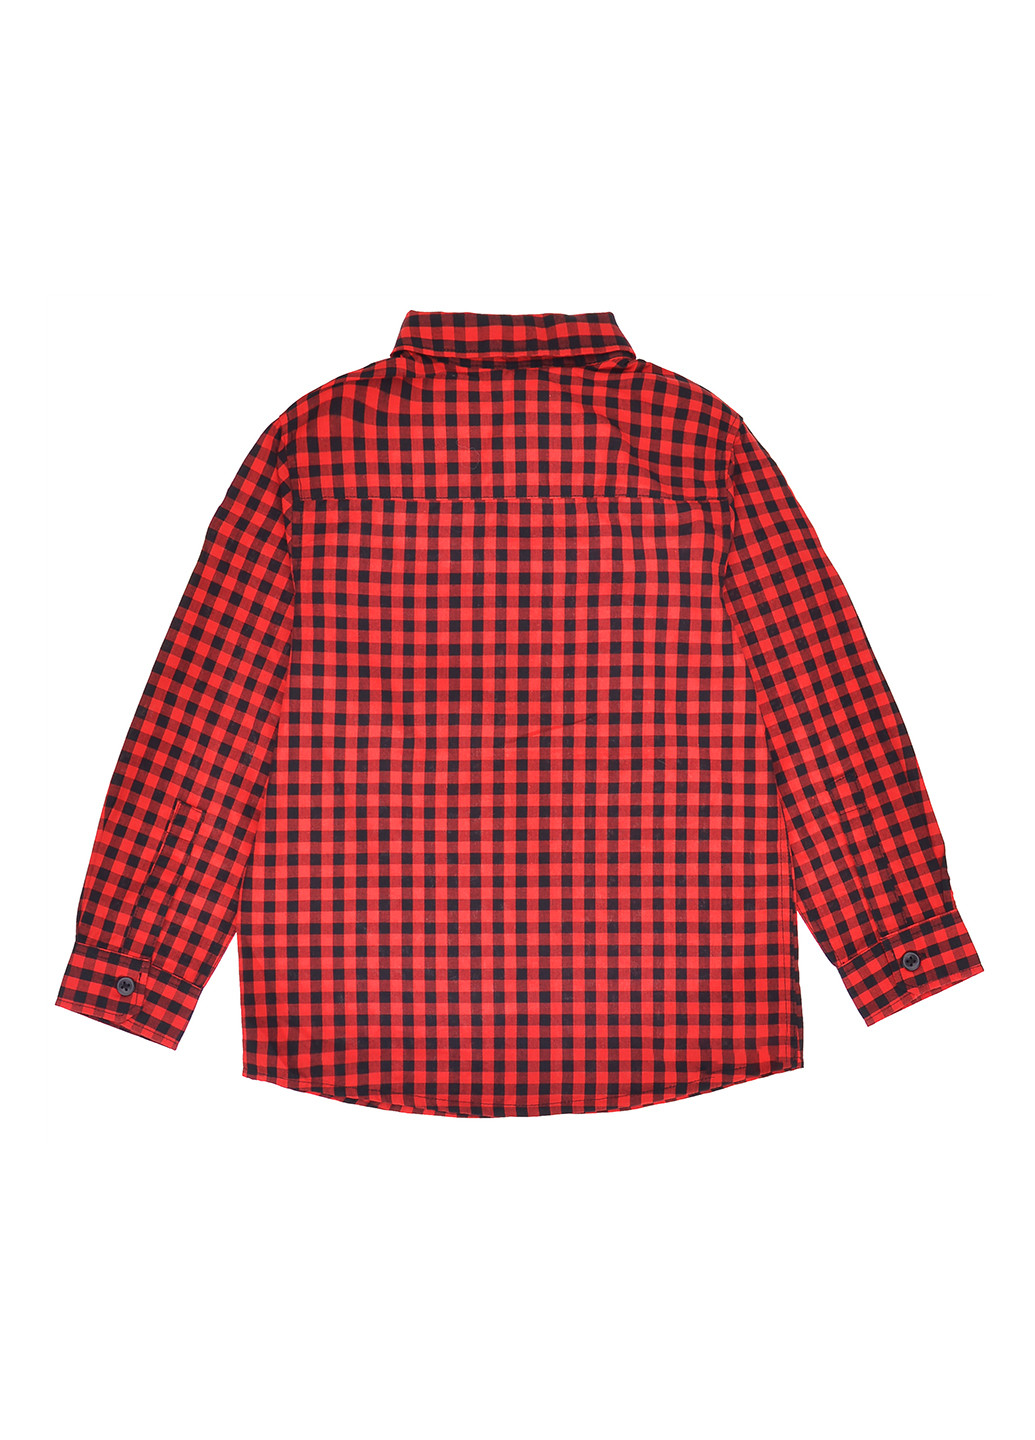 Красная кэжуал рубашка H&M с длинным рукавом